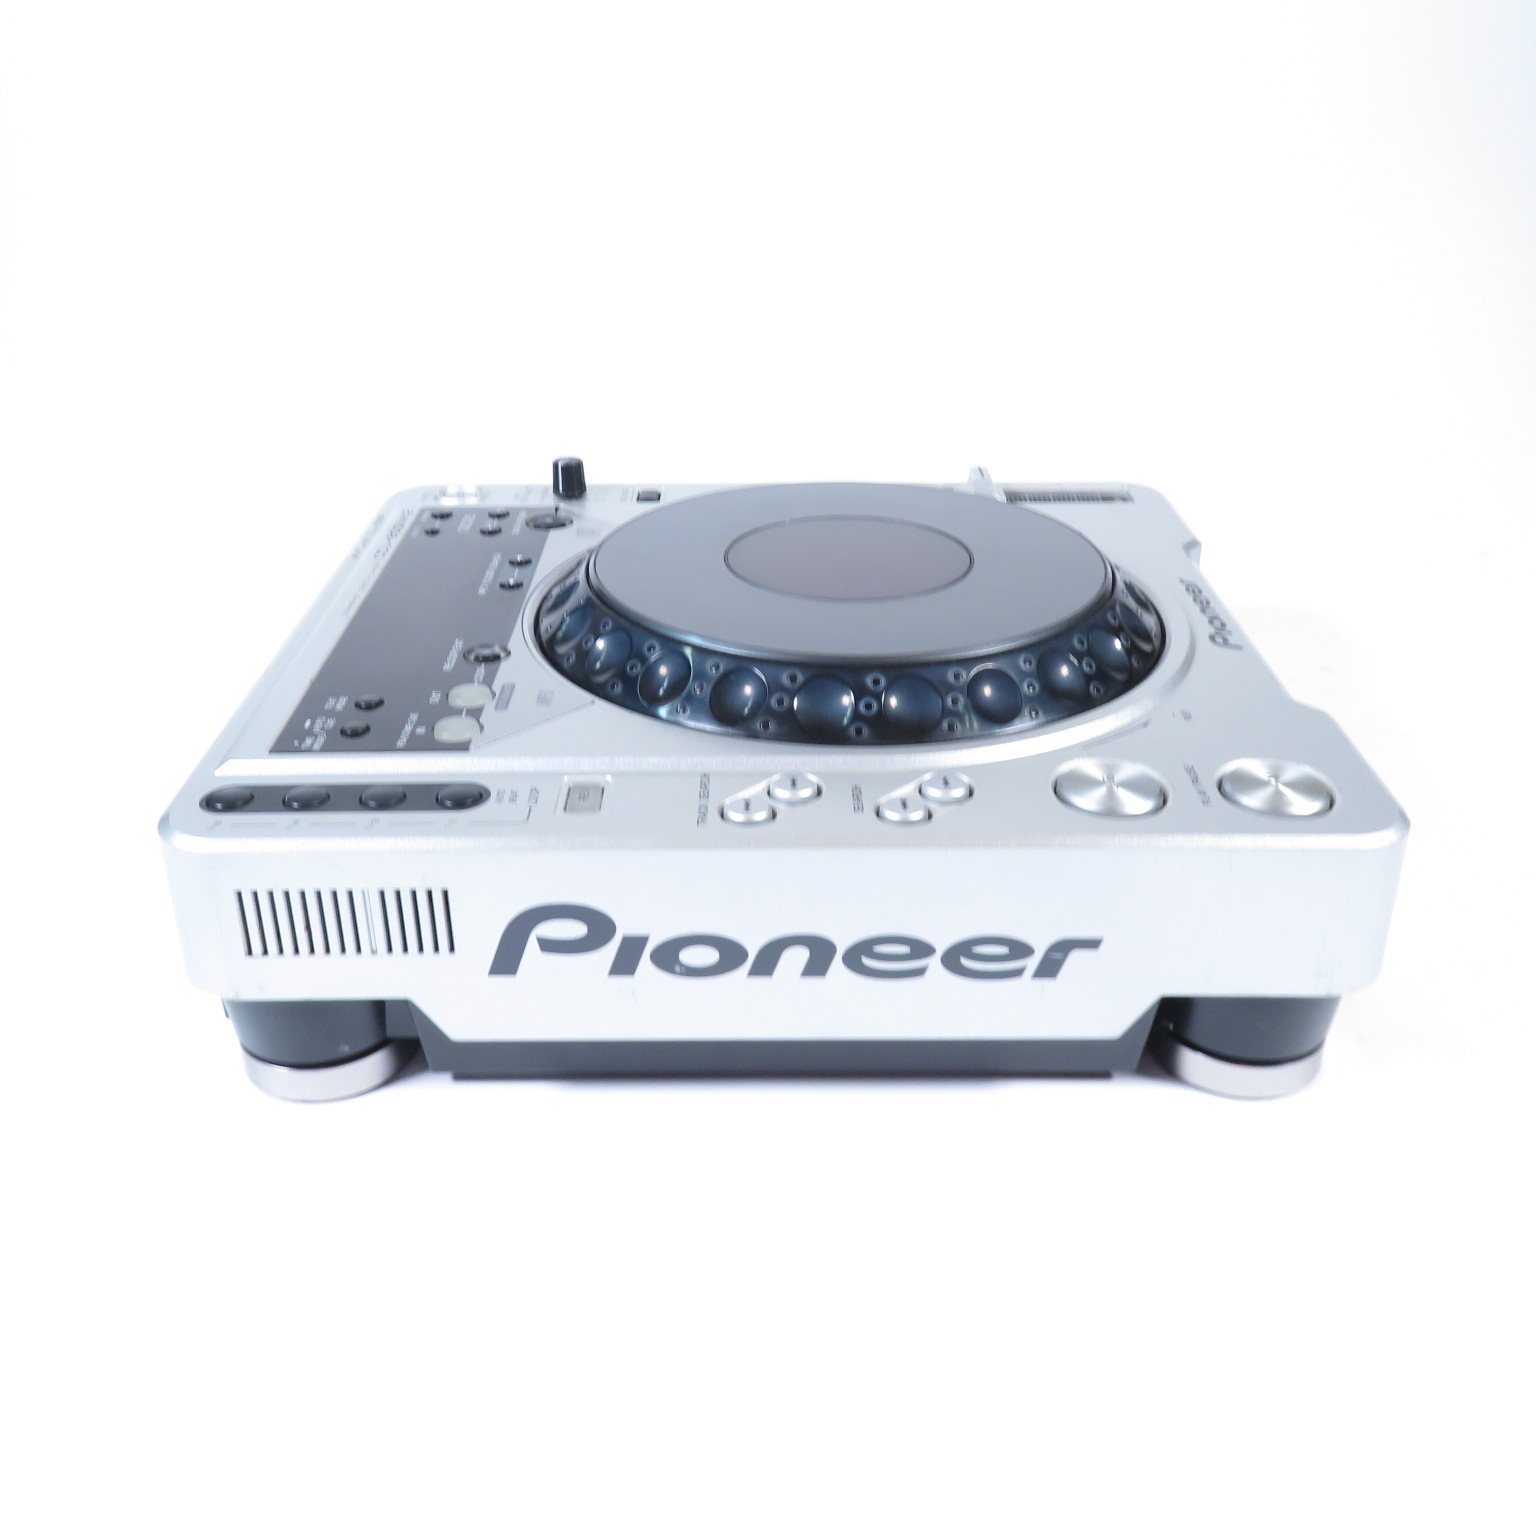 Pioneer DJ CDJ-800MK2 Professional Tabletop Single Deck CD/MP3